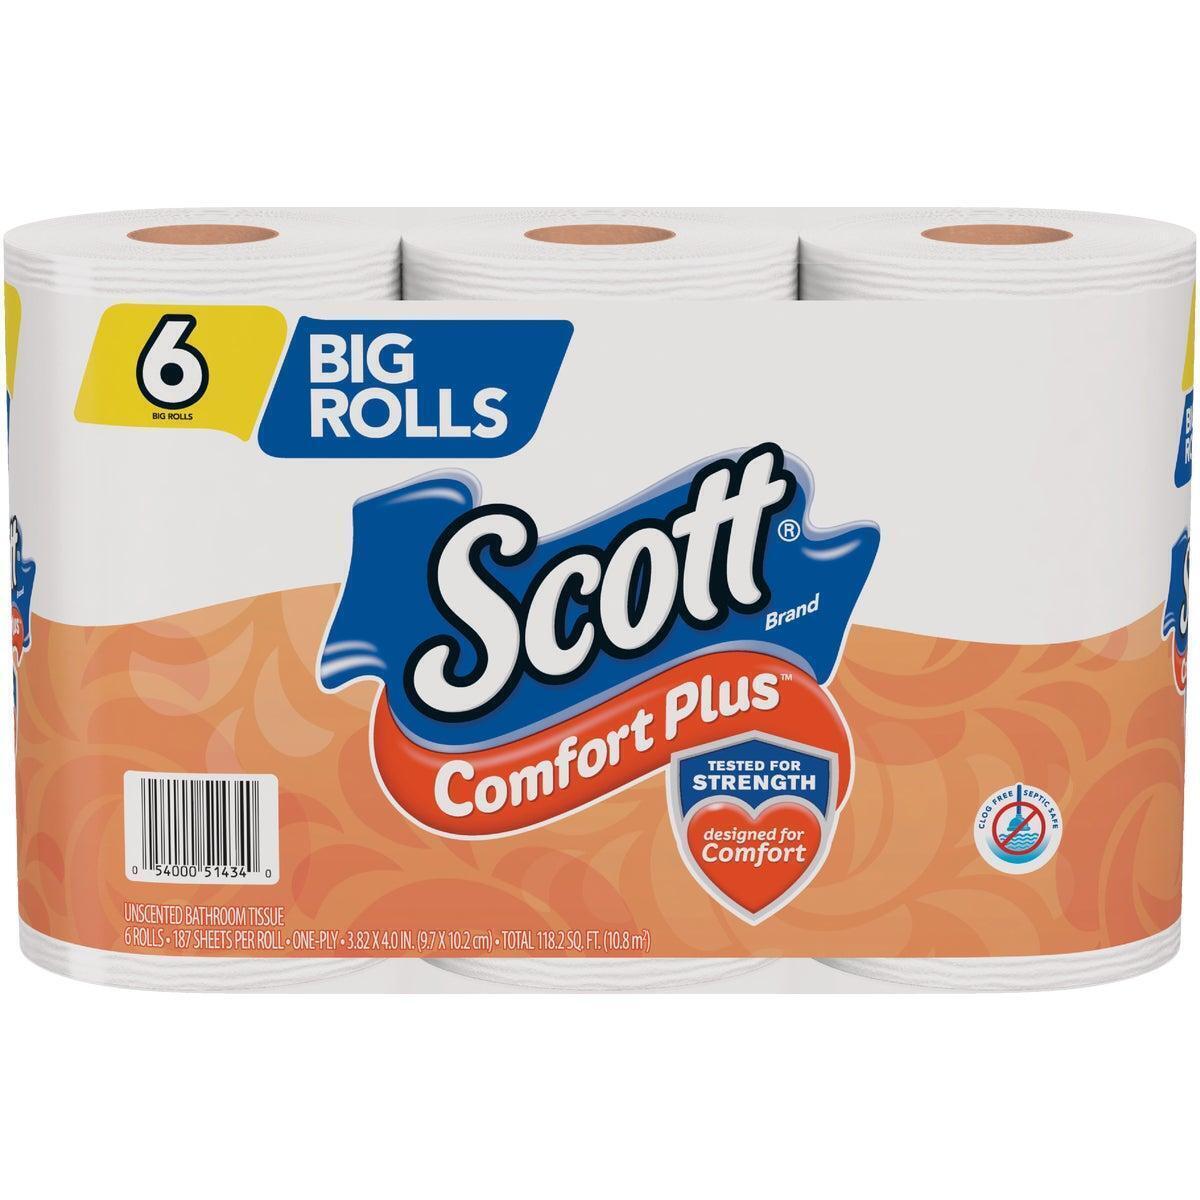 Scott Comfort Plus Toilet Paper (6 Big Rolls) 51434 Pack of 8